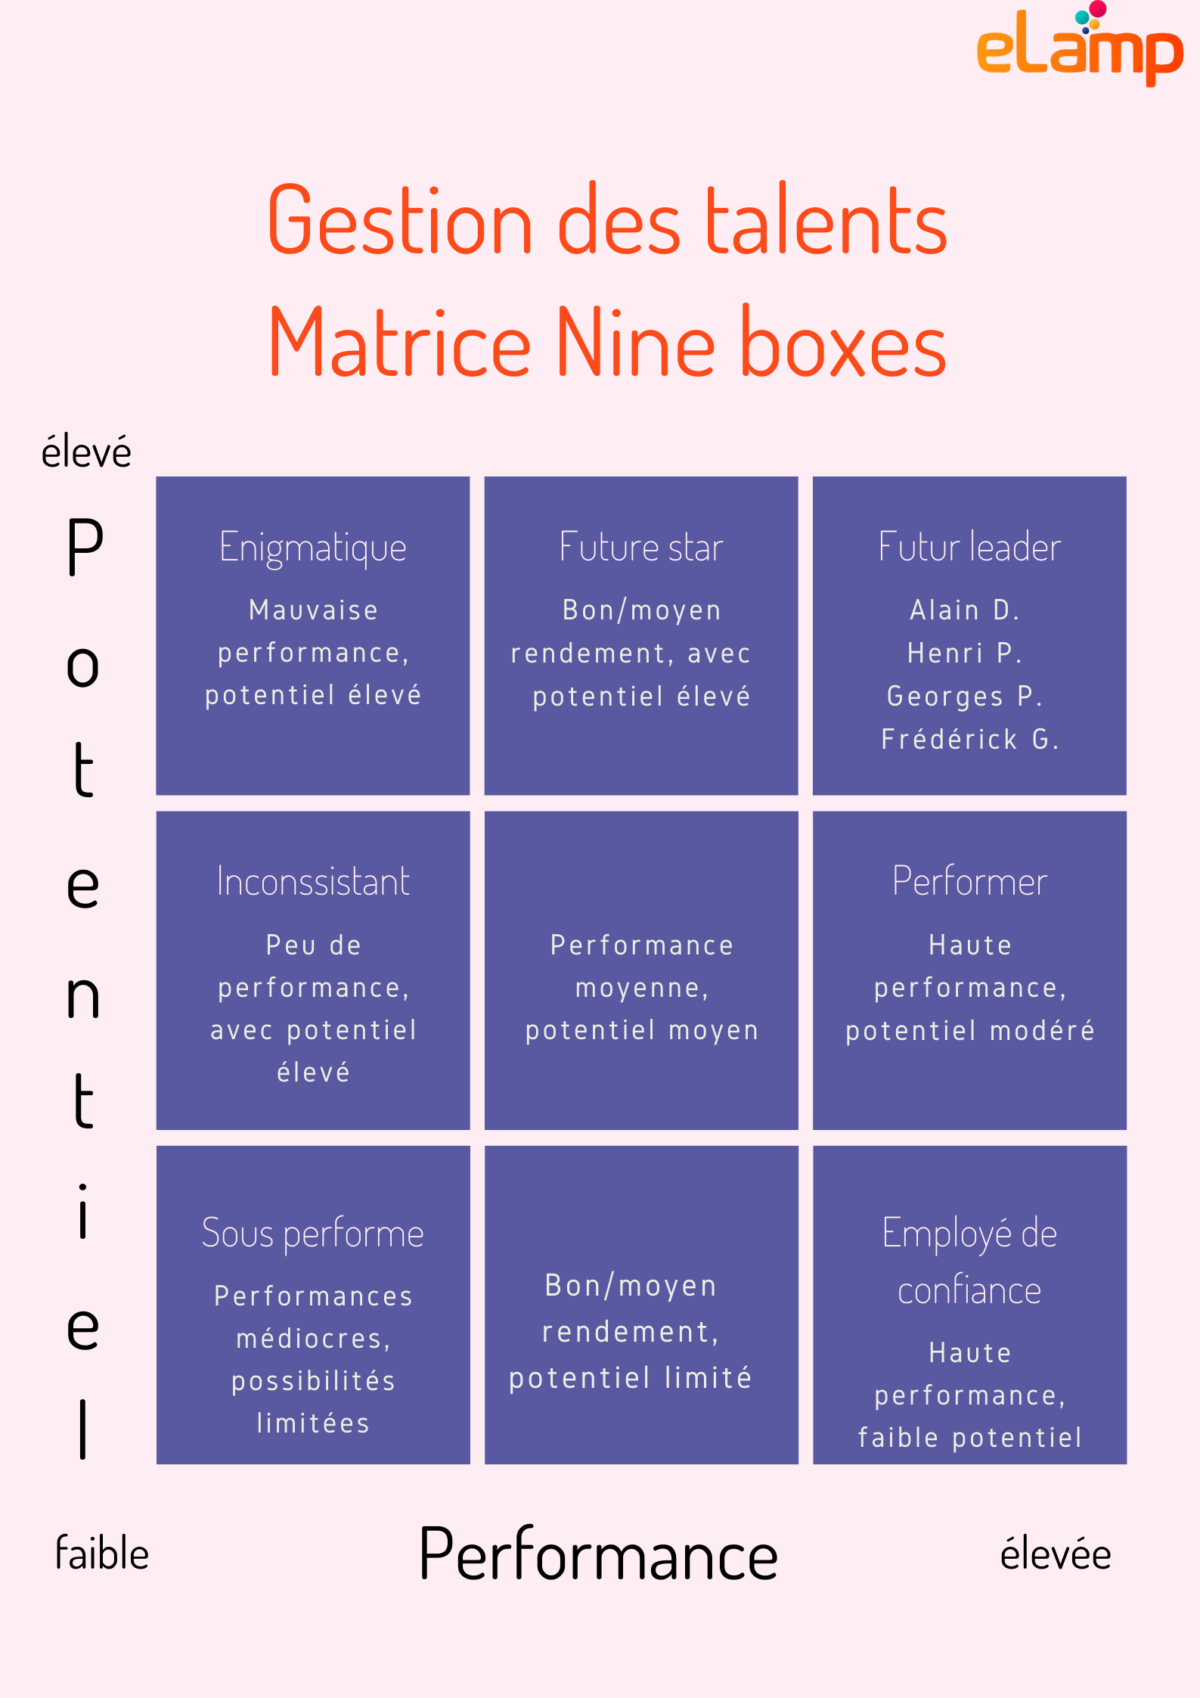 Fr-Matrice-nine-boxes